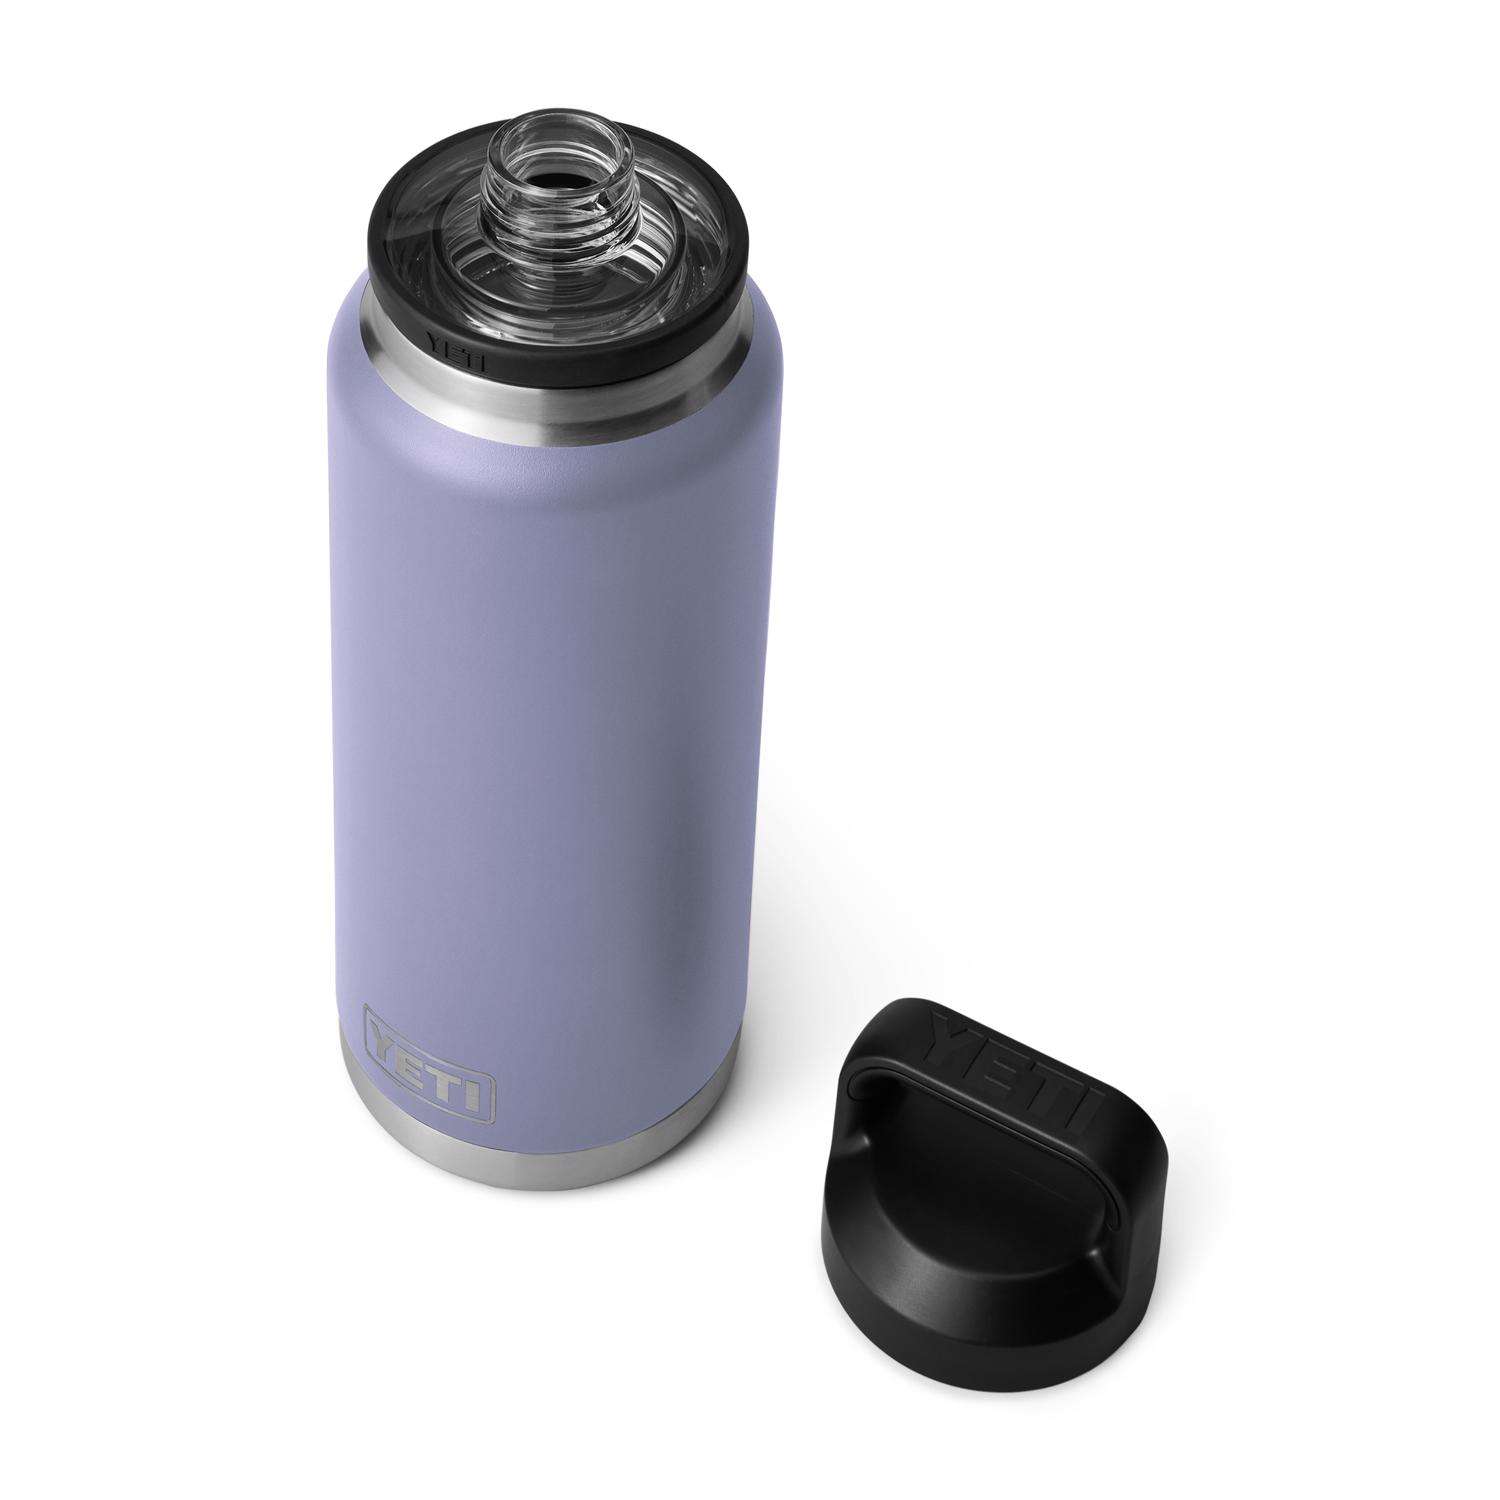  YETI Rambler 64 oz Bottle, Vacuum Insulated, Stainless Steel  with Chug Cap, Bimini Pink : Sports & Outdoors